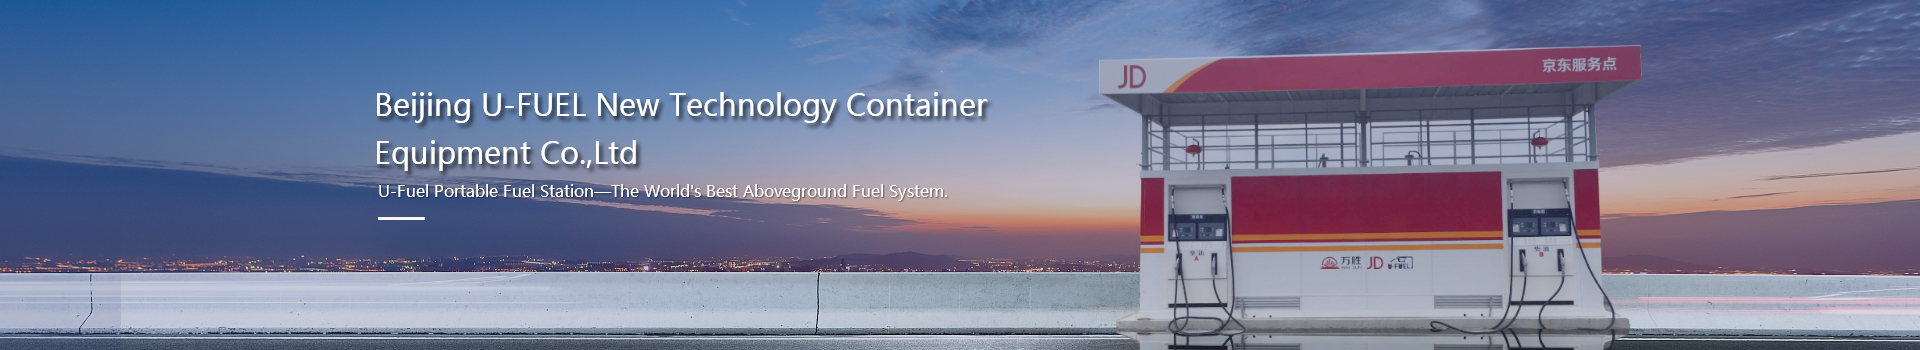 Beijing U-FUEL New Technology Container Equipment Co.,Ltd